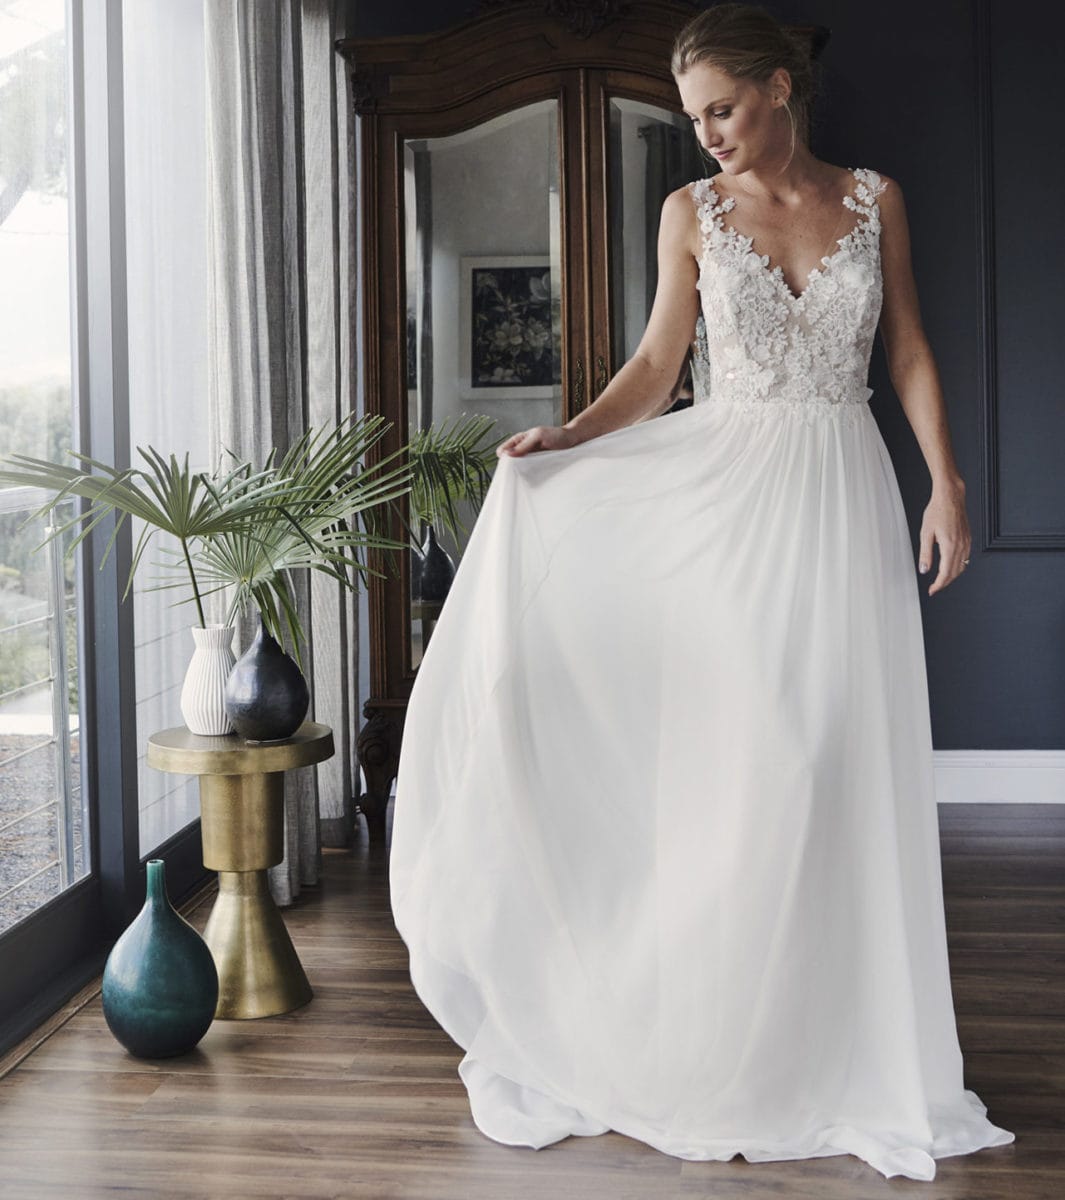 Robyn Roberts Bridal Studio Wedding gown design